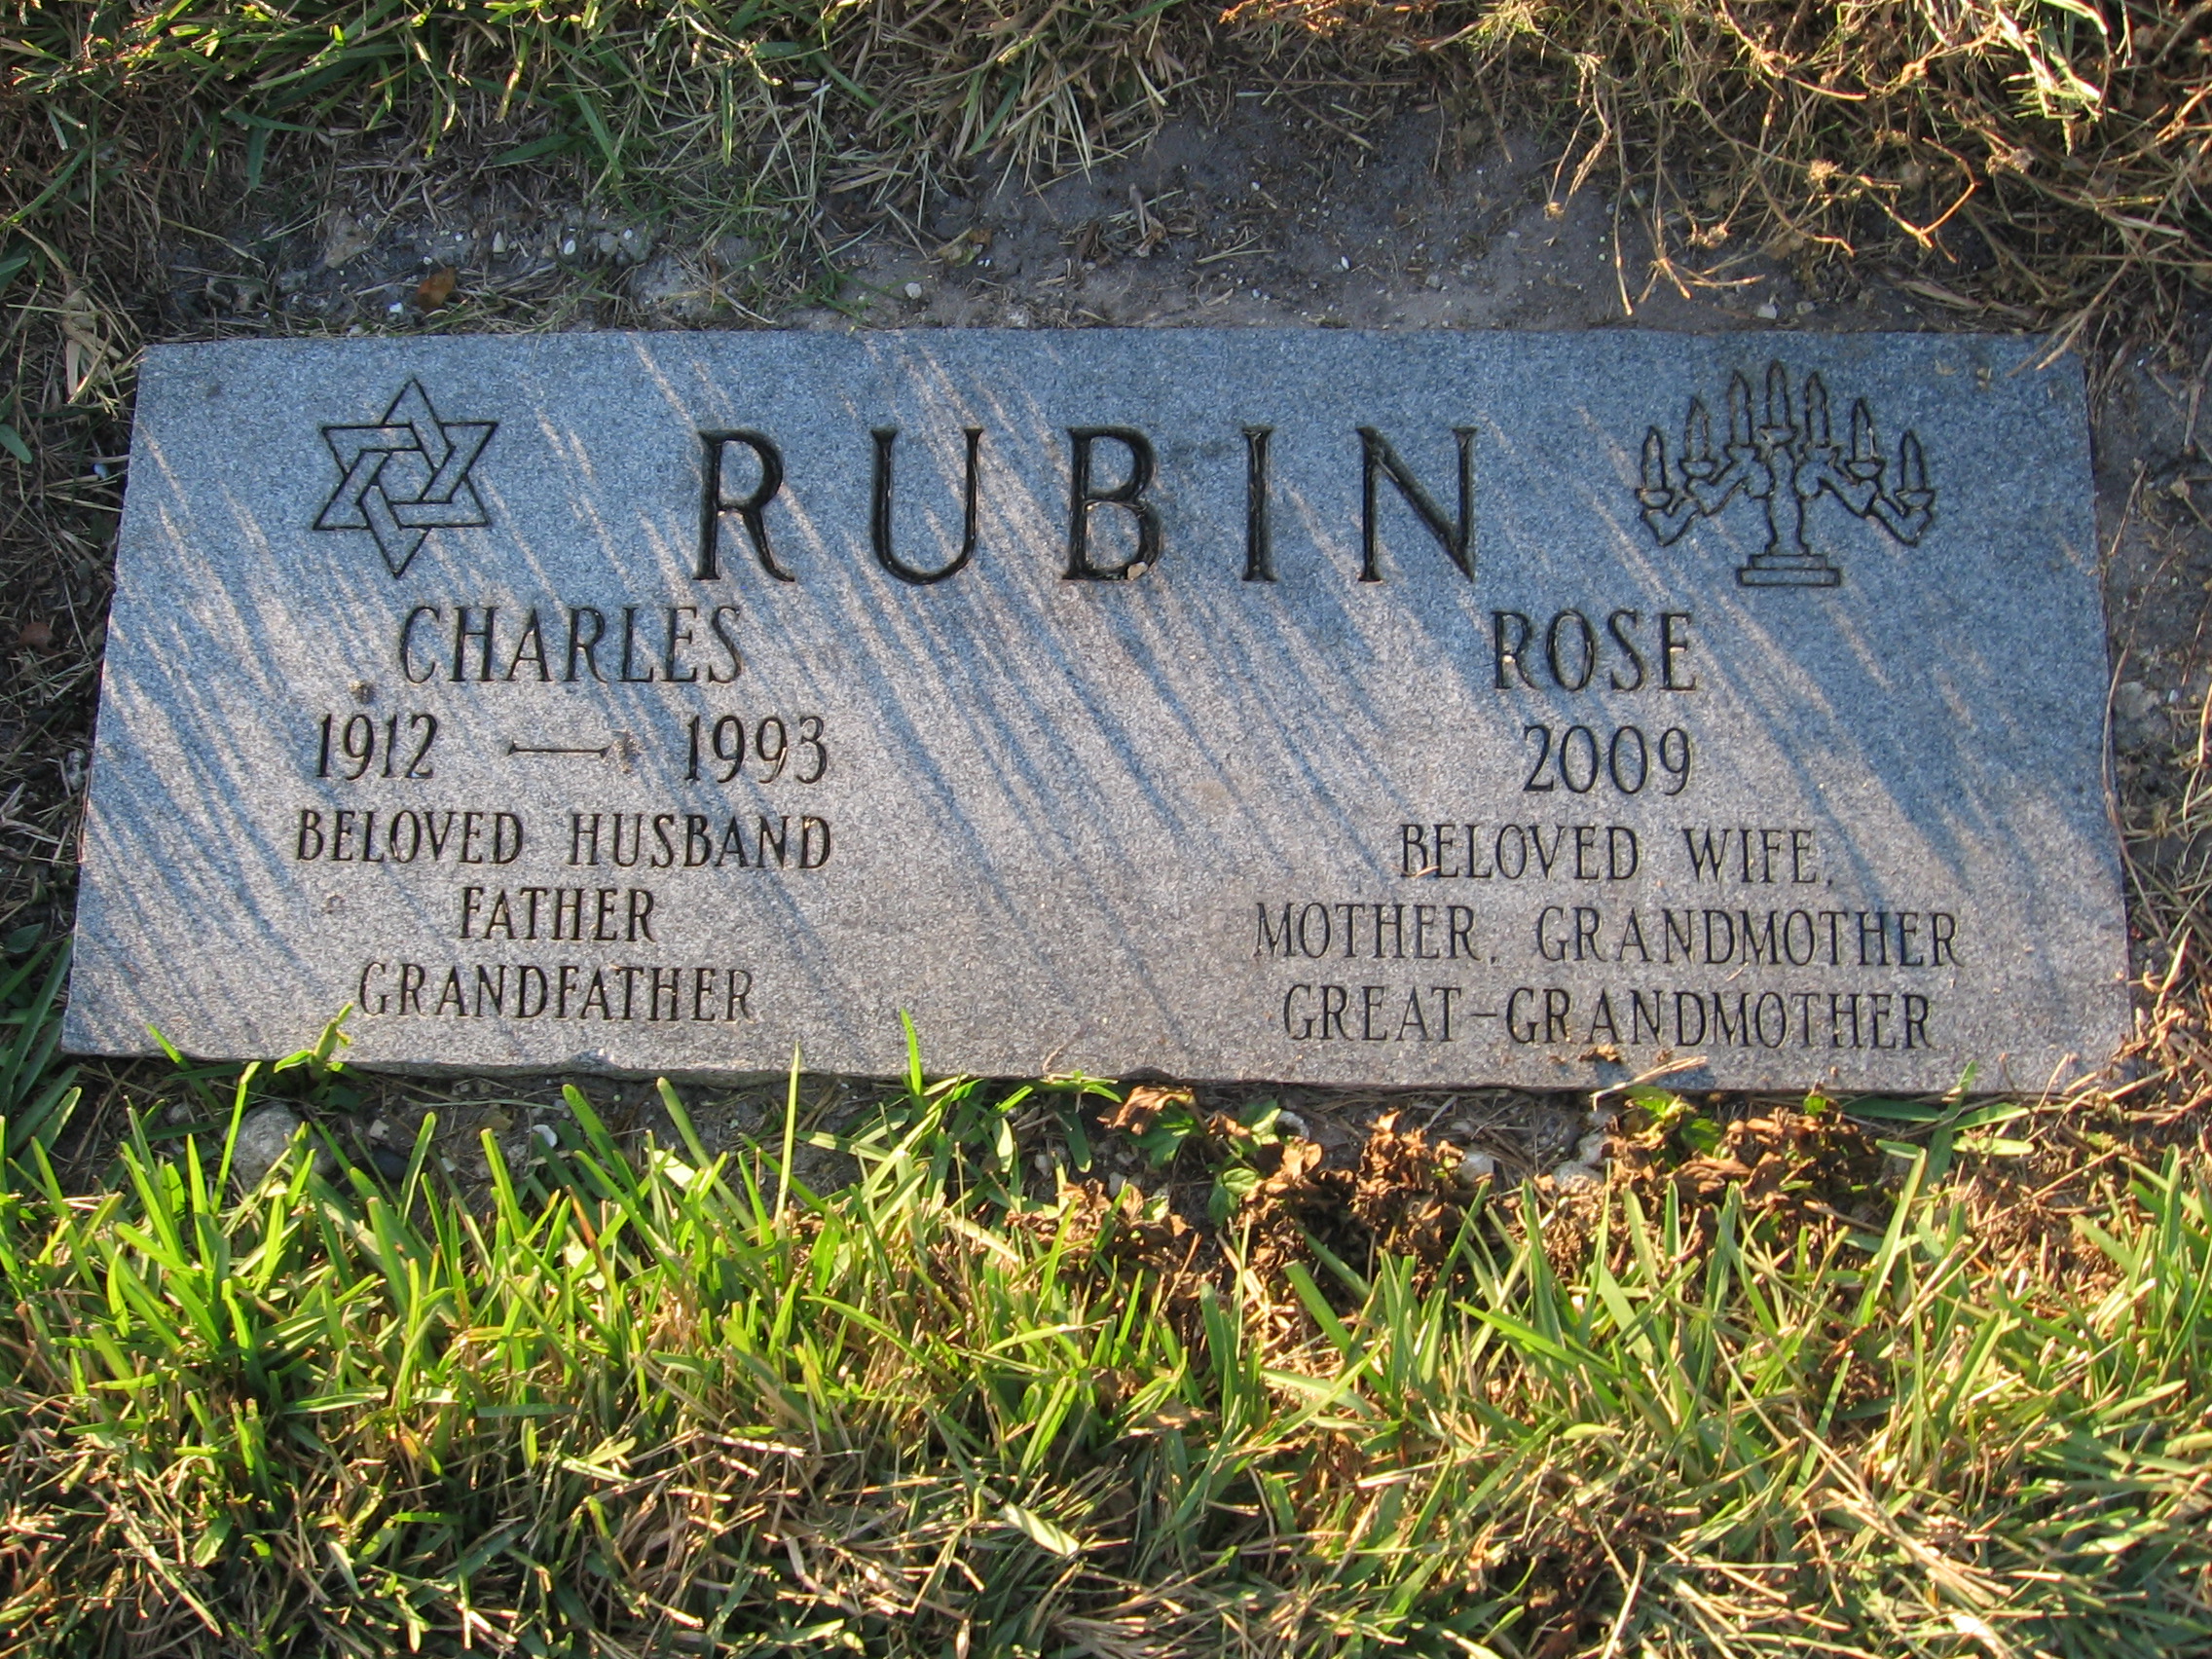 Rose Rubin